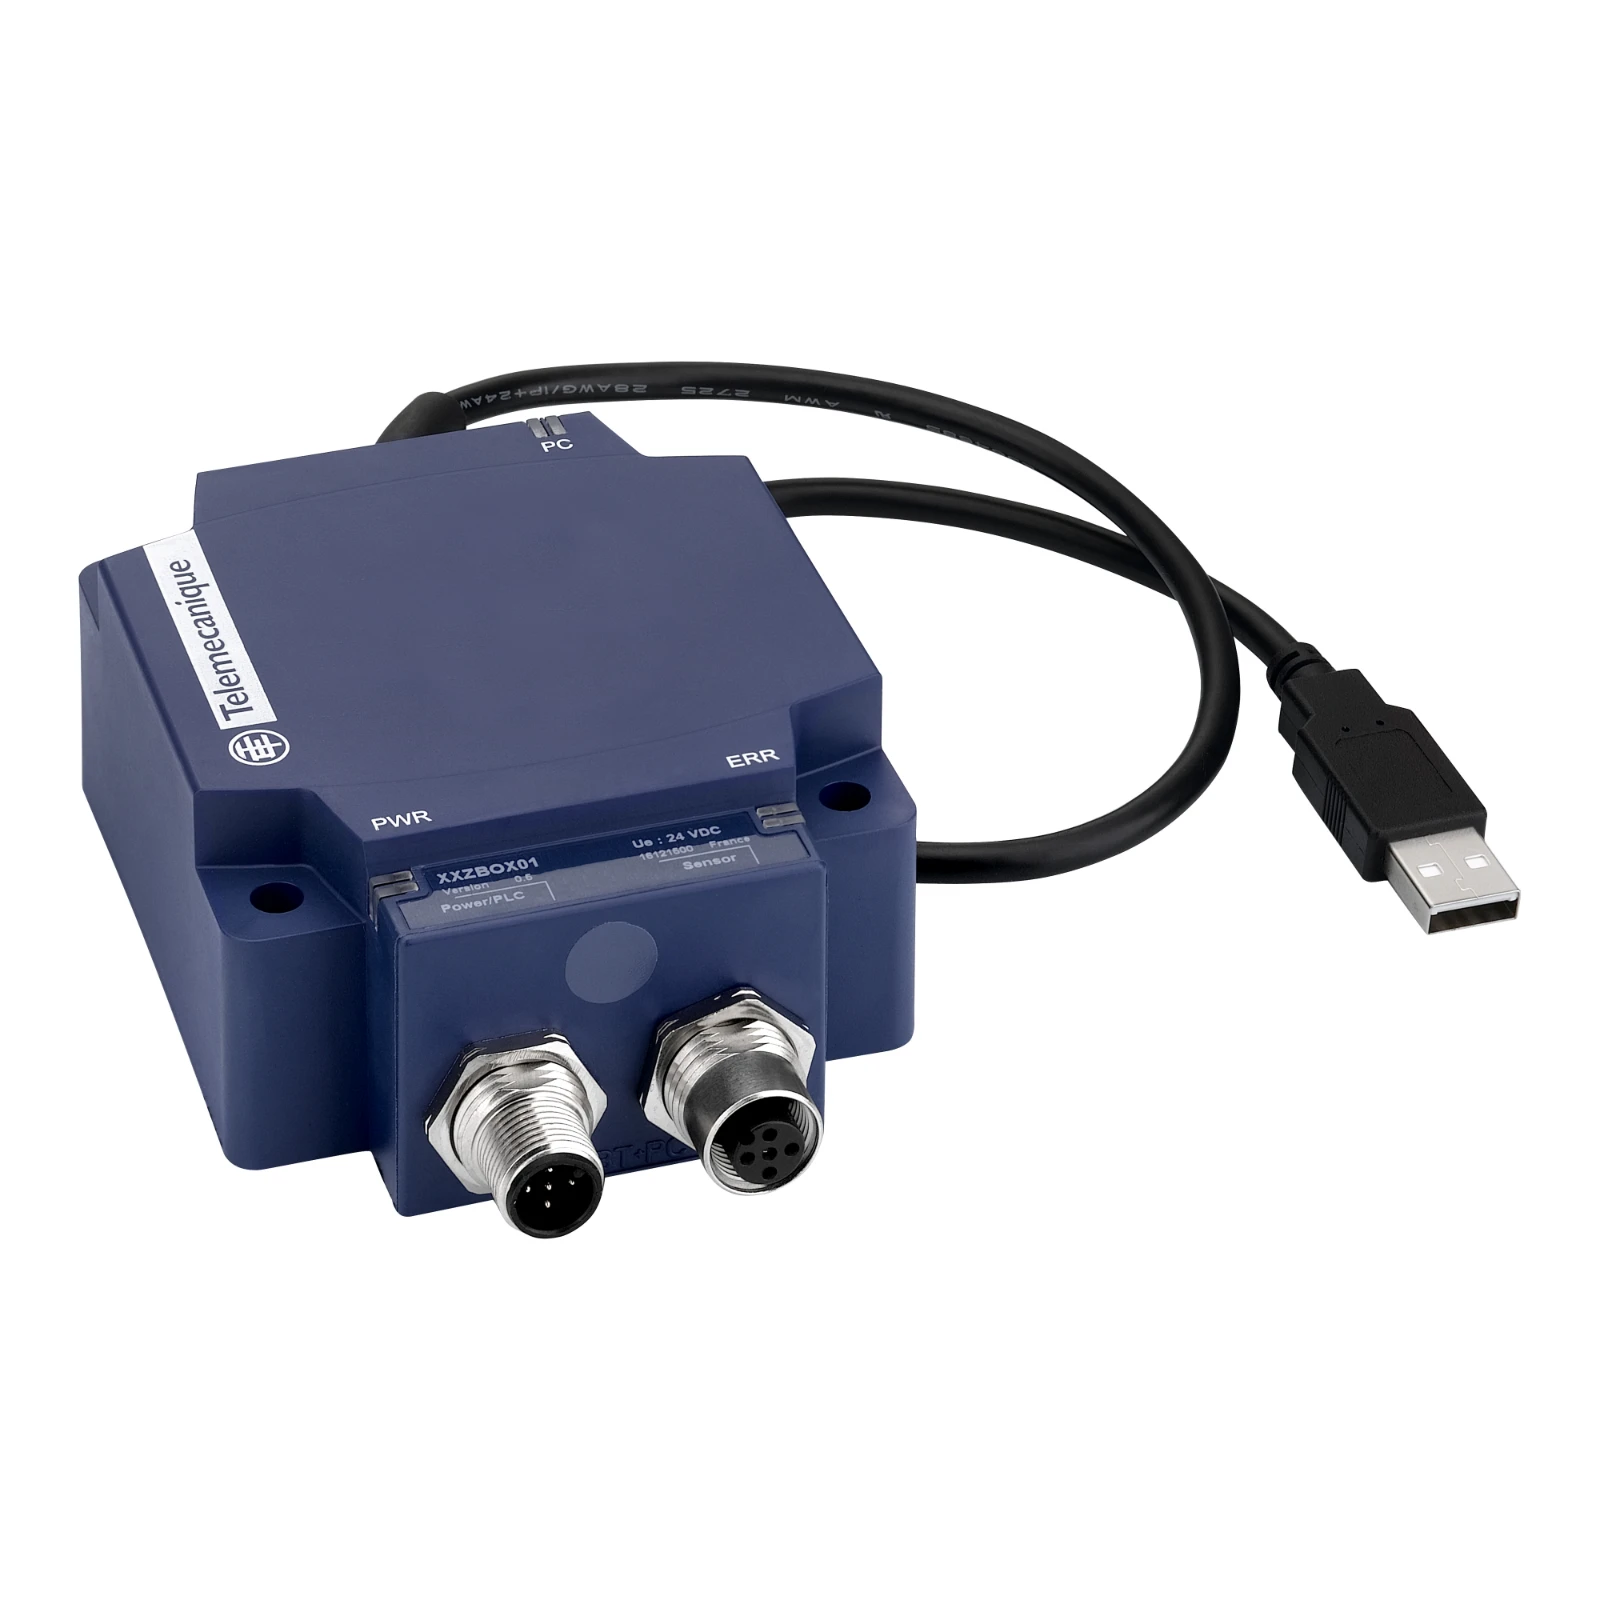 3070664 - Telemecanique Sensors XXZBOX01